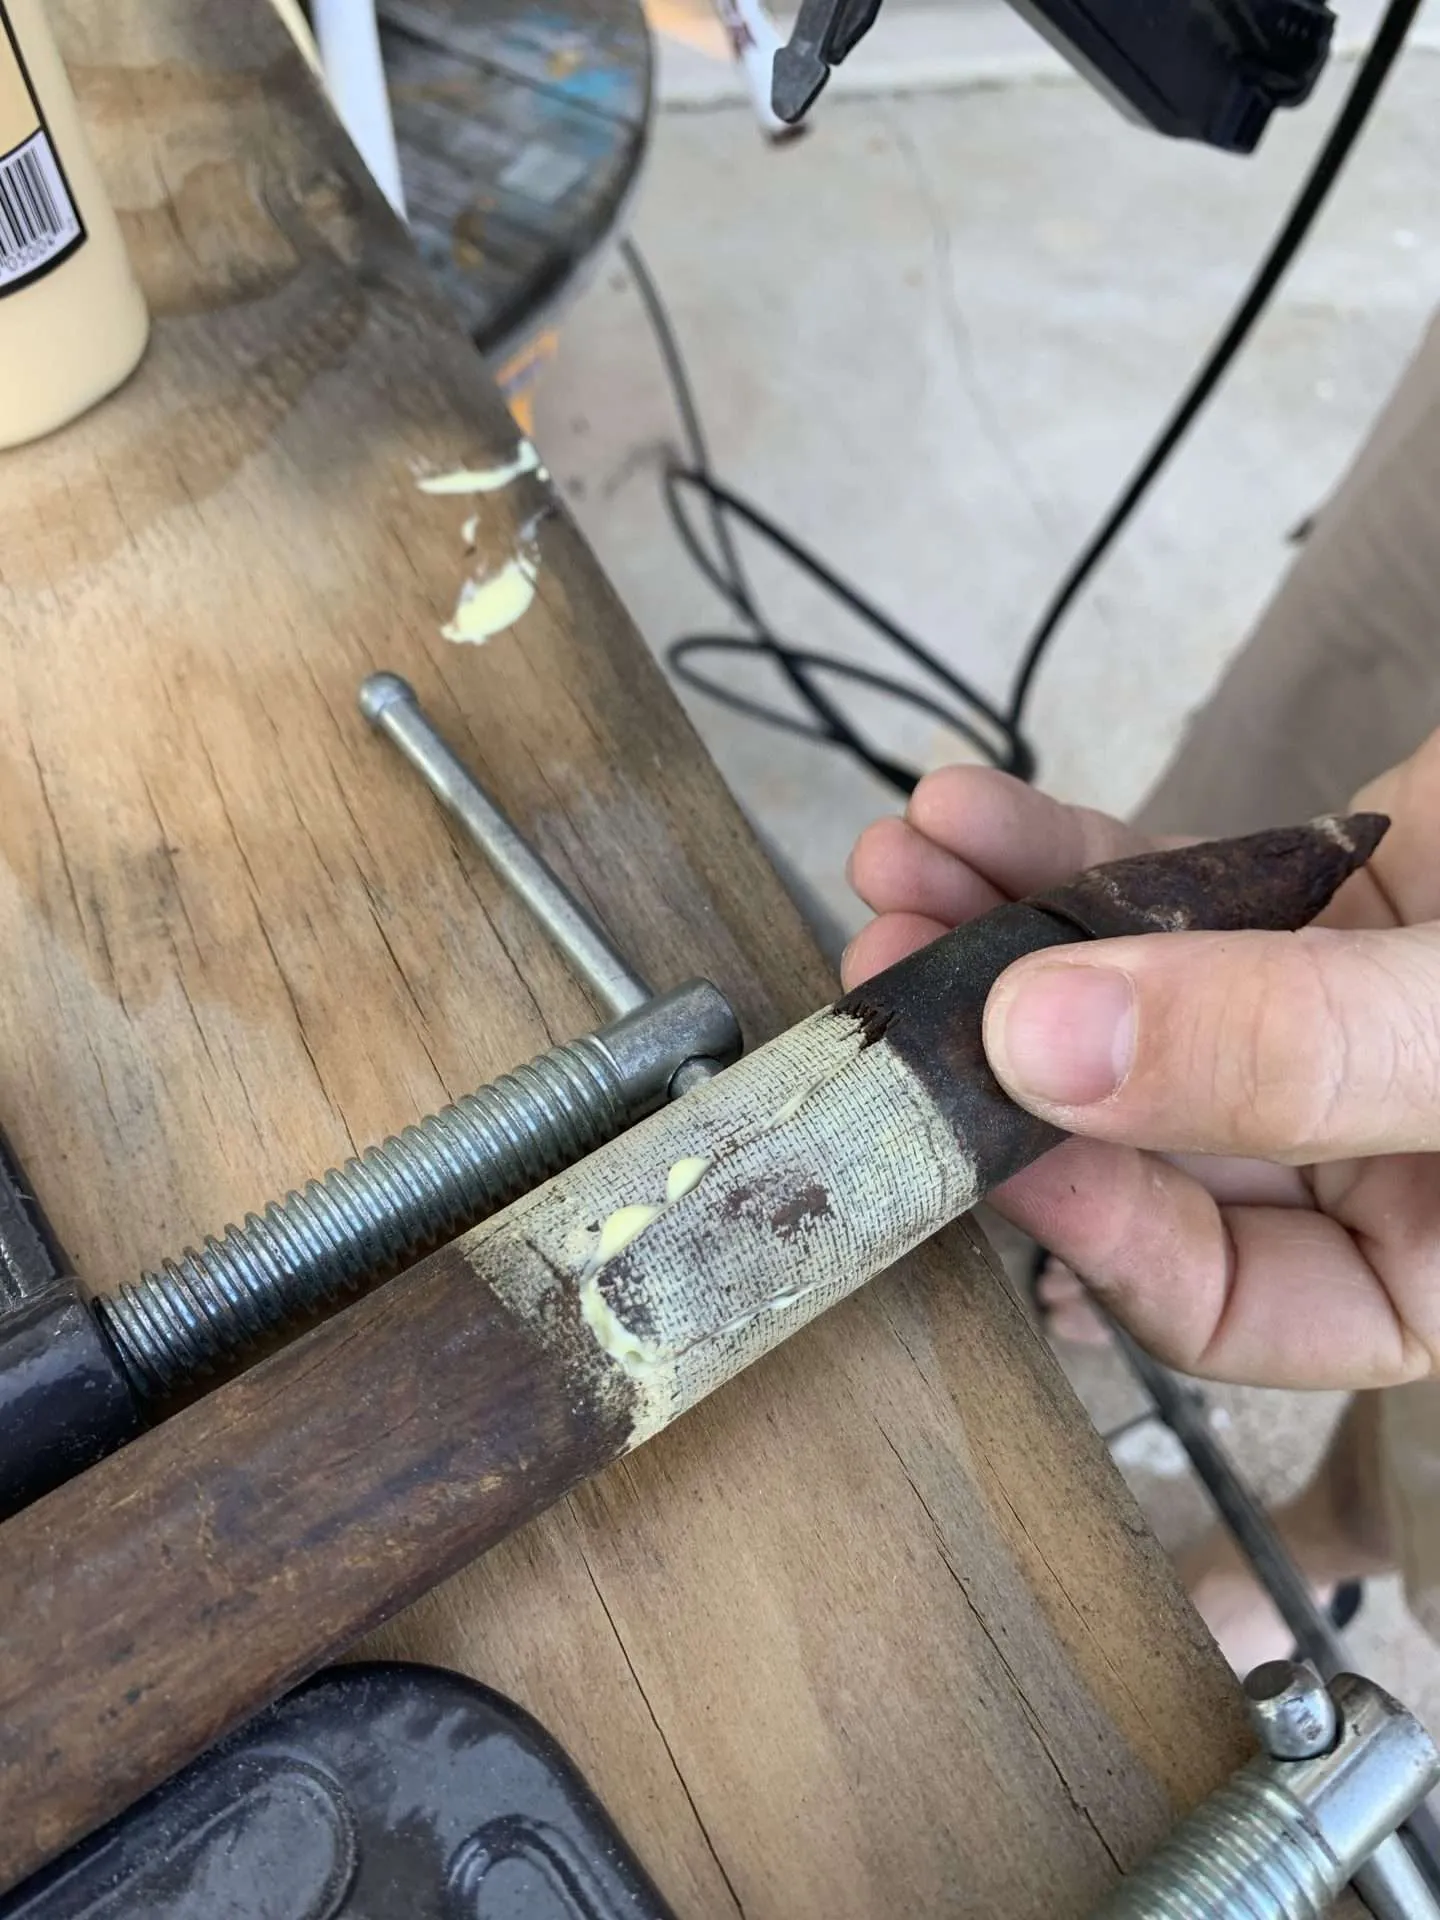 Repairing the broken leg of a tripod lamp.